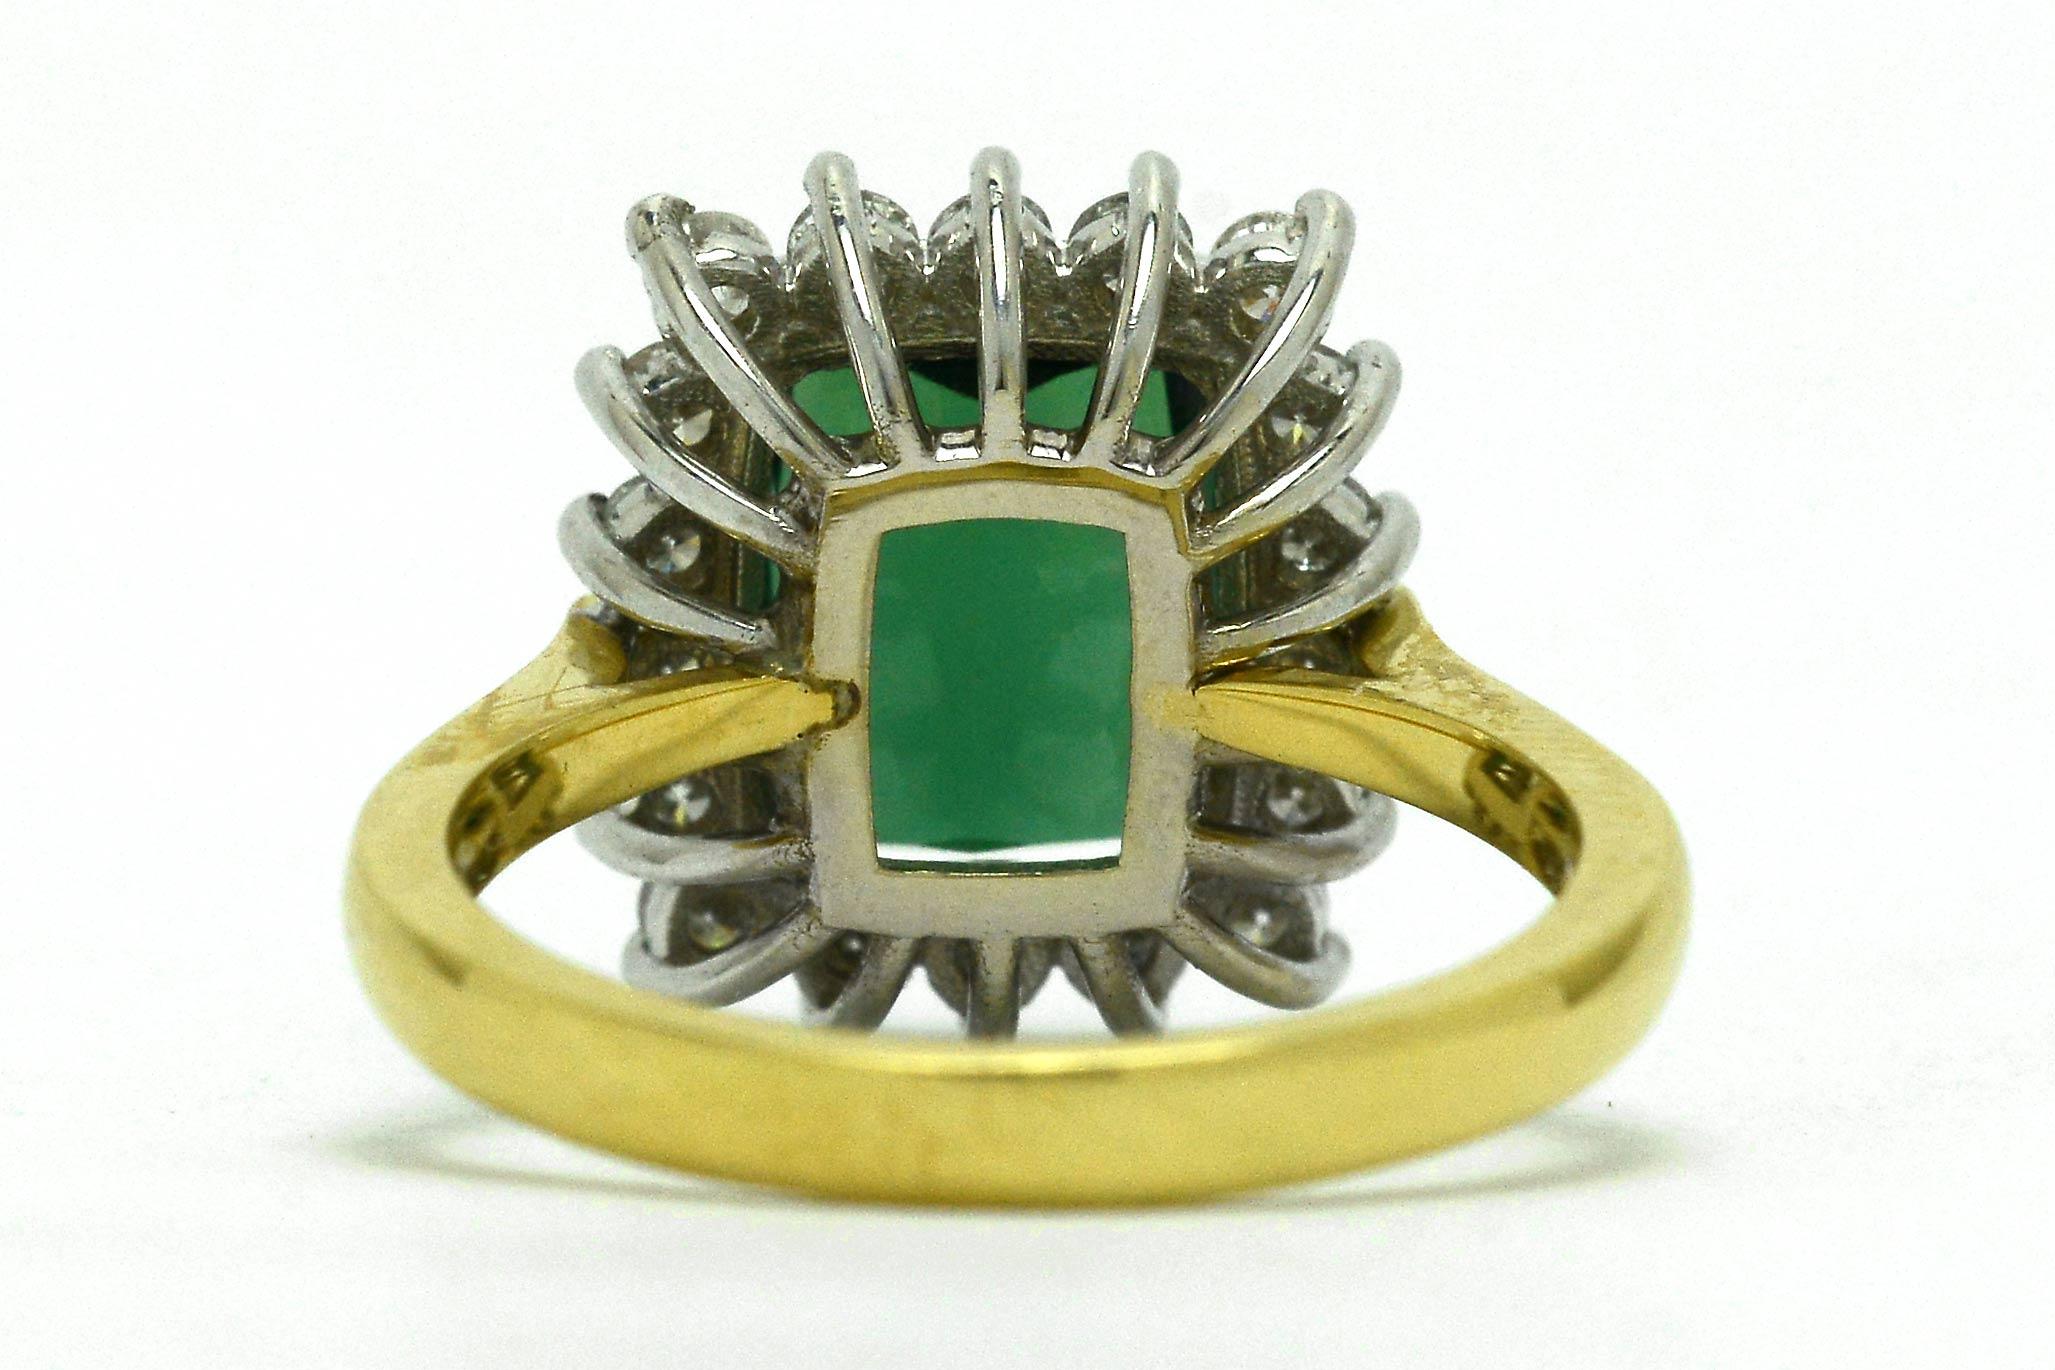 Cushion Cut Vivid Green Tourmaline Engagement Ring Cocktail Gemstone 4 Carat Diamond Halo